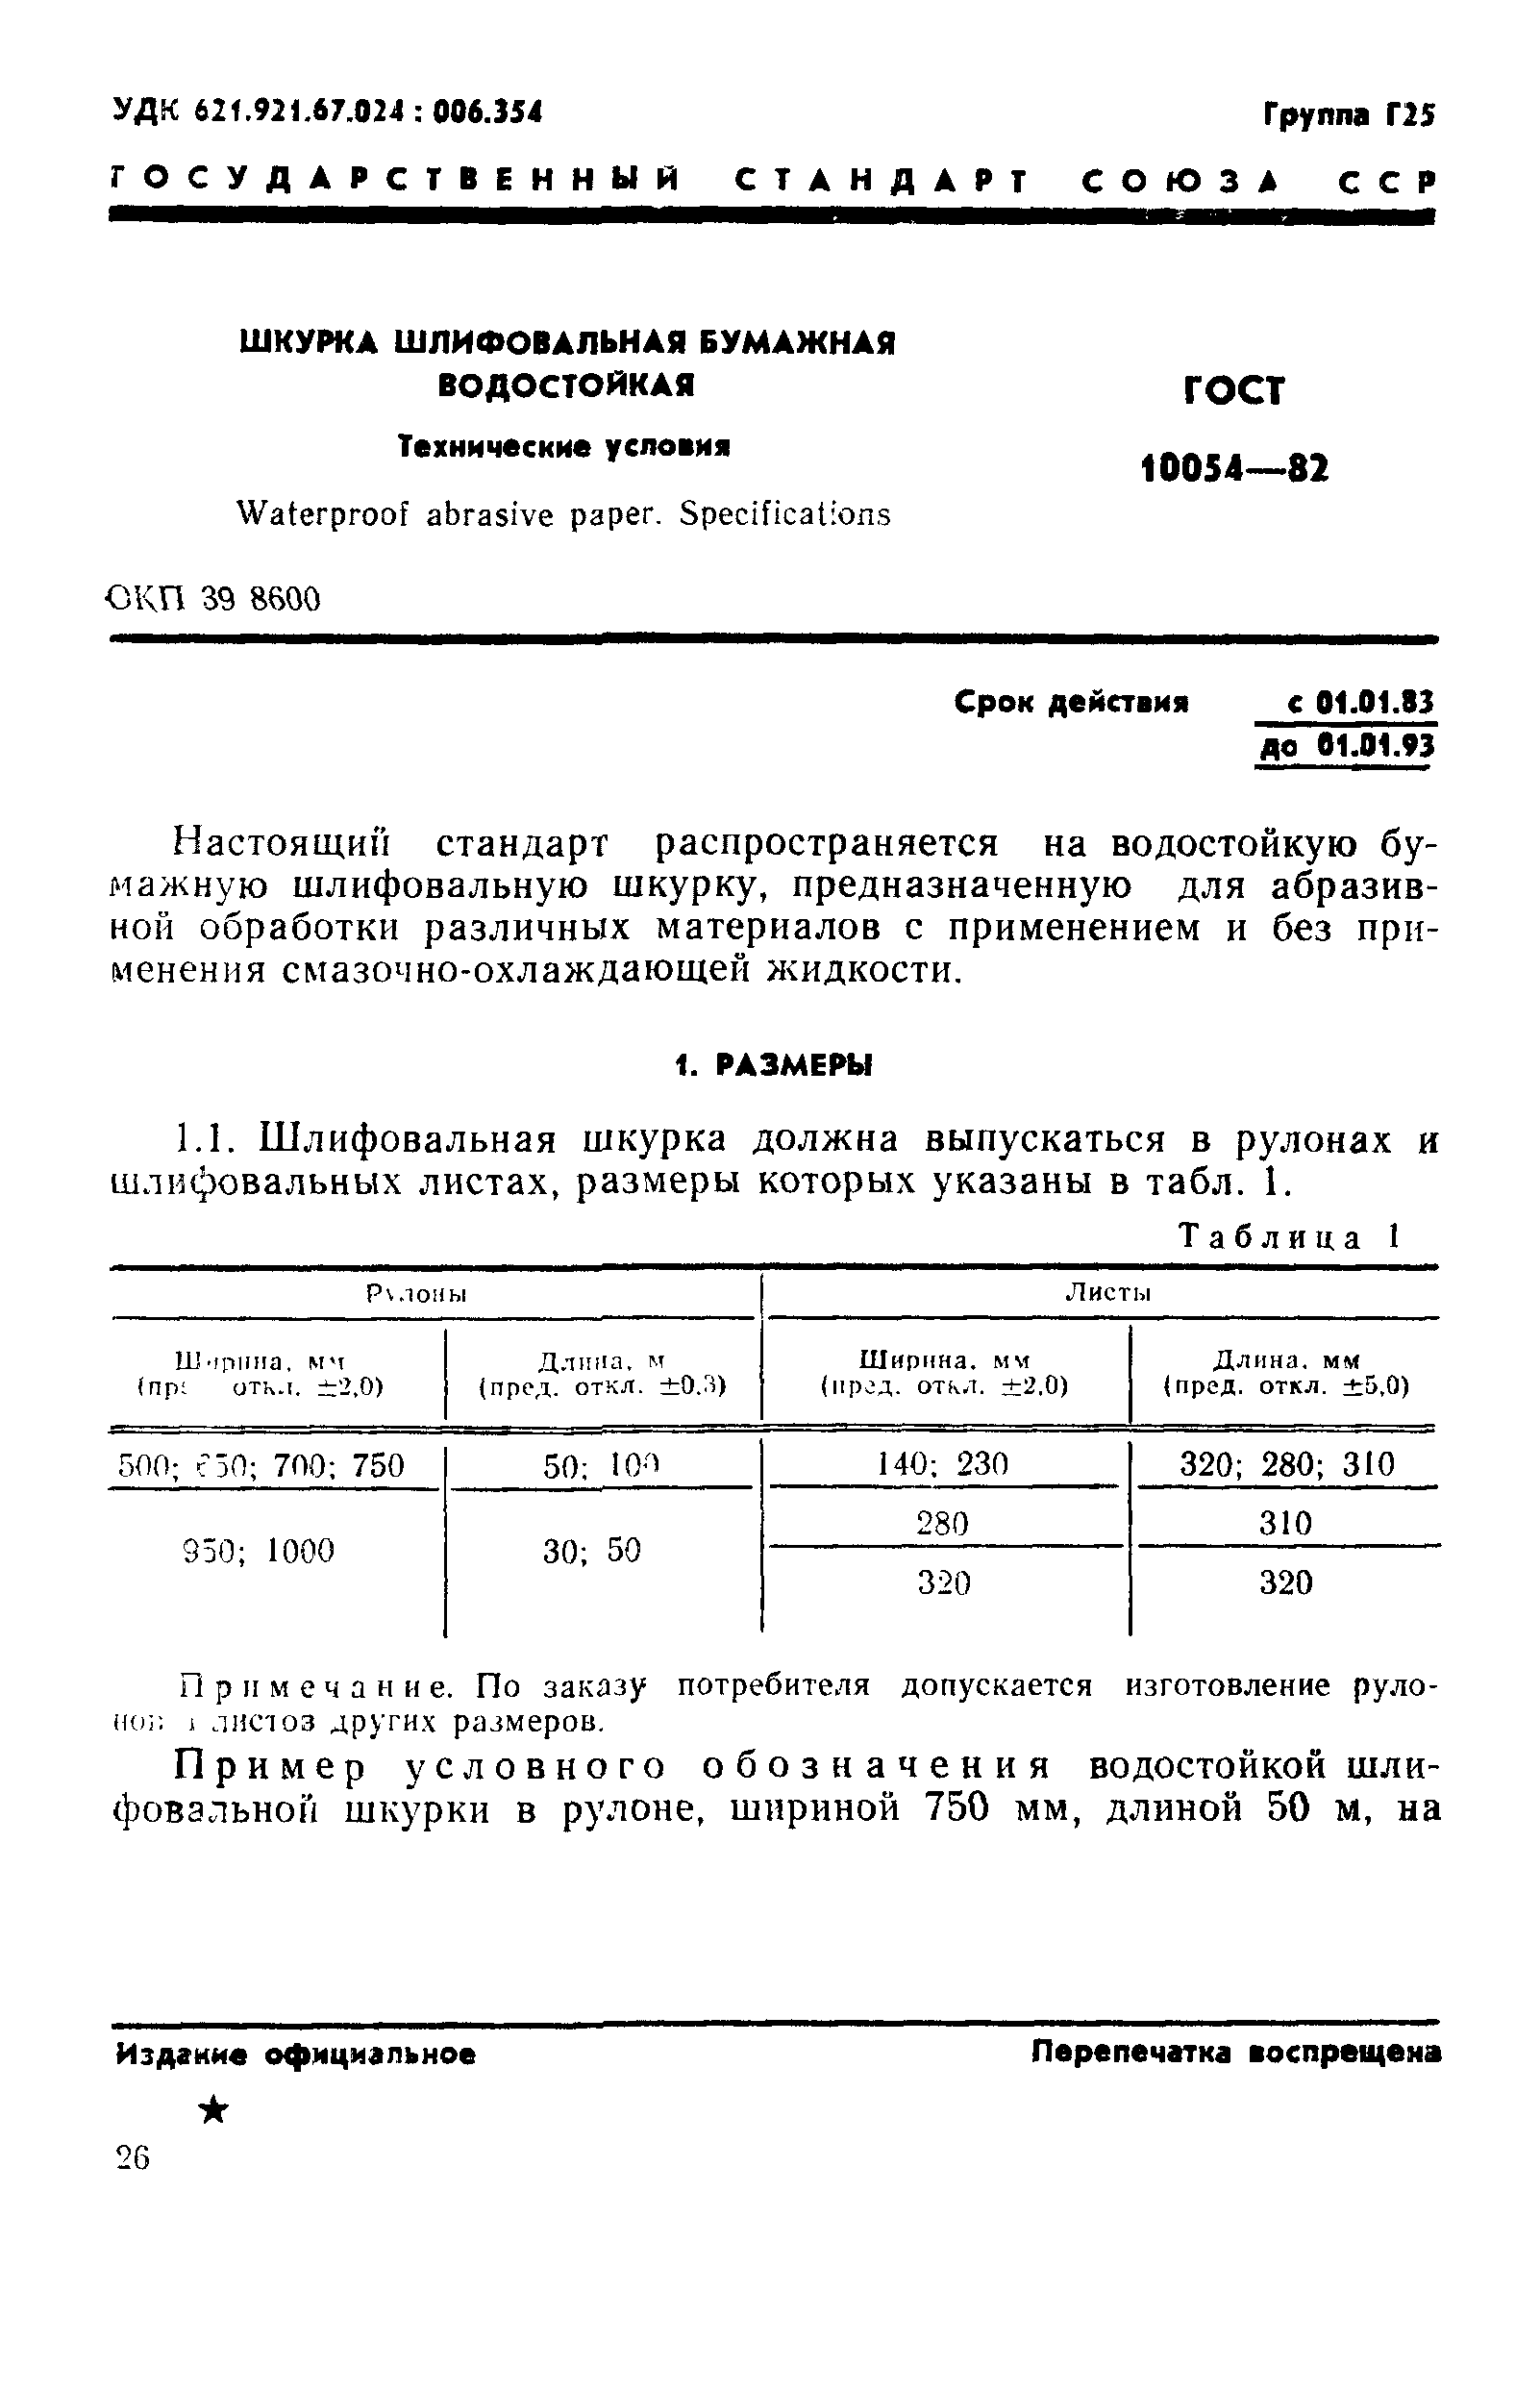 ГОСТ 10054-82